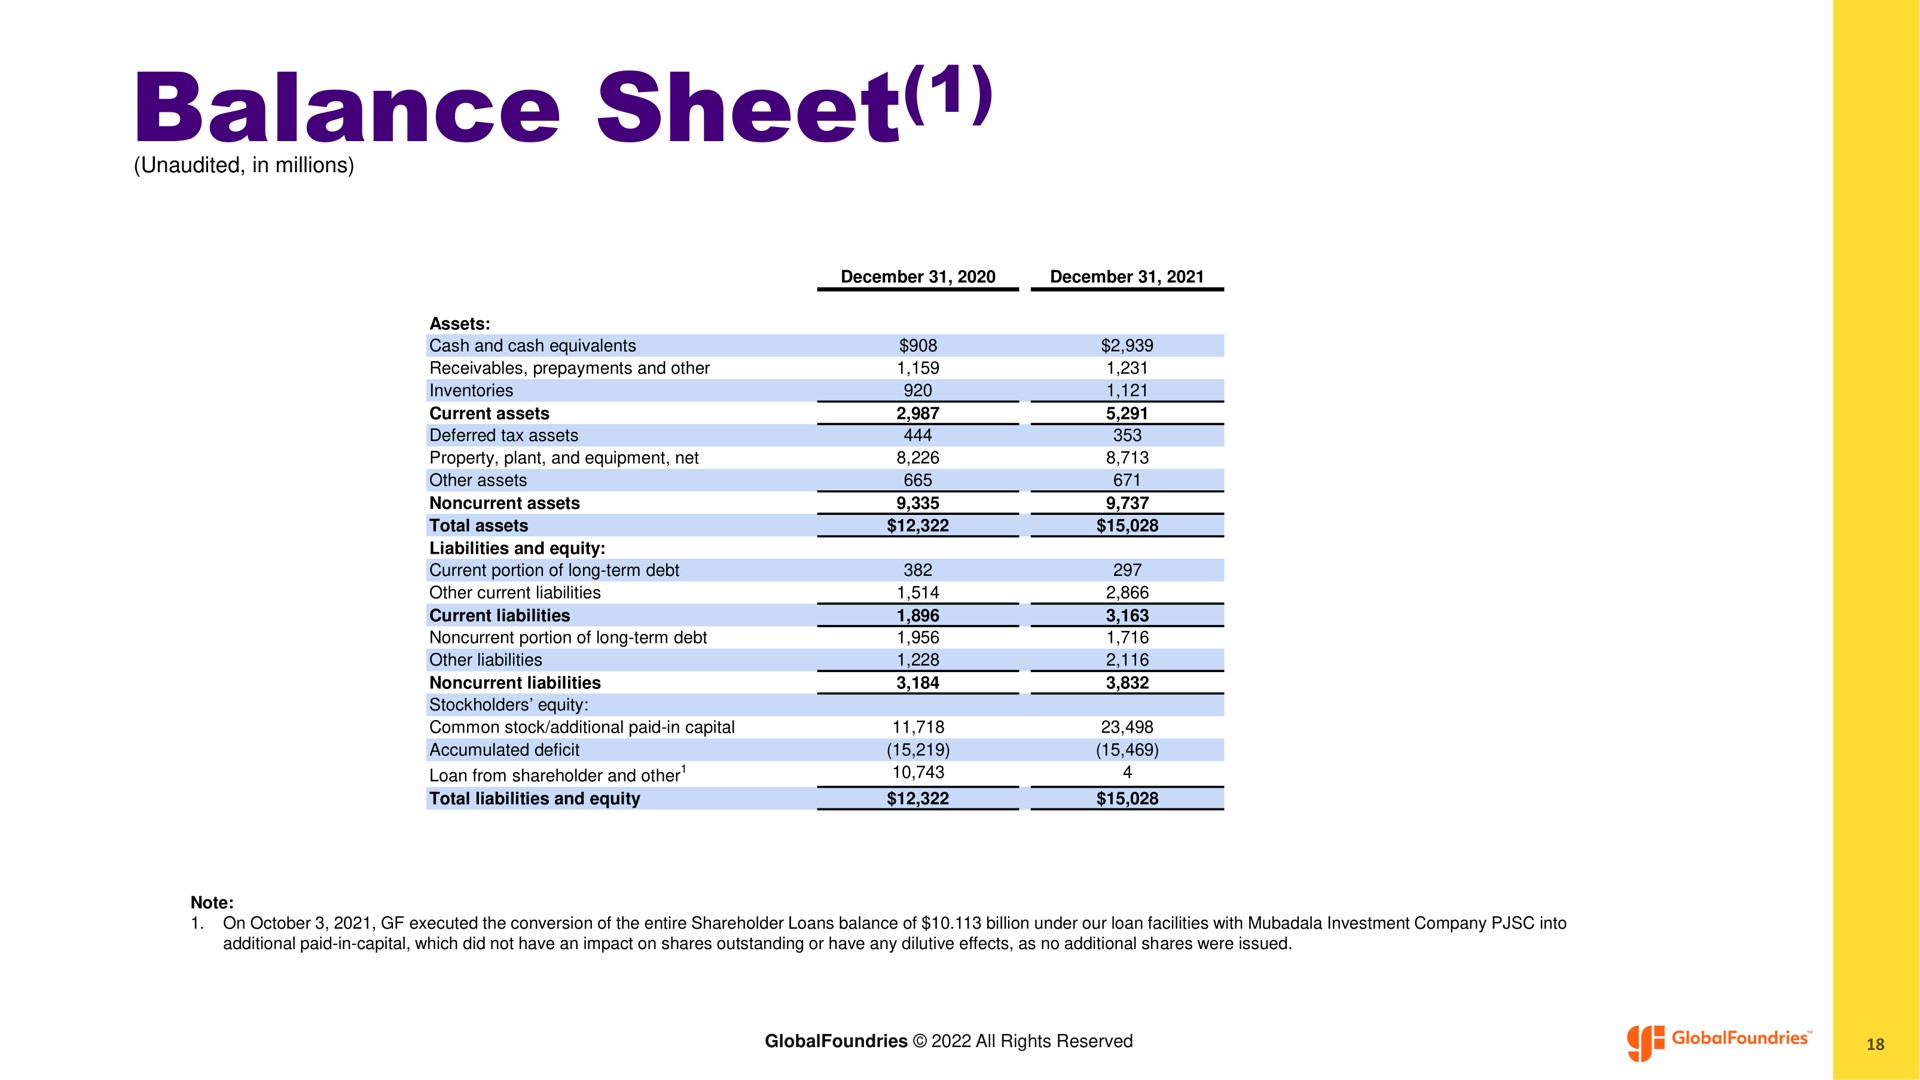 balance sheet | GlobalFoundries